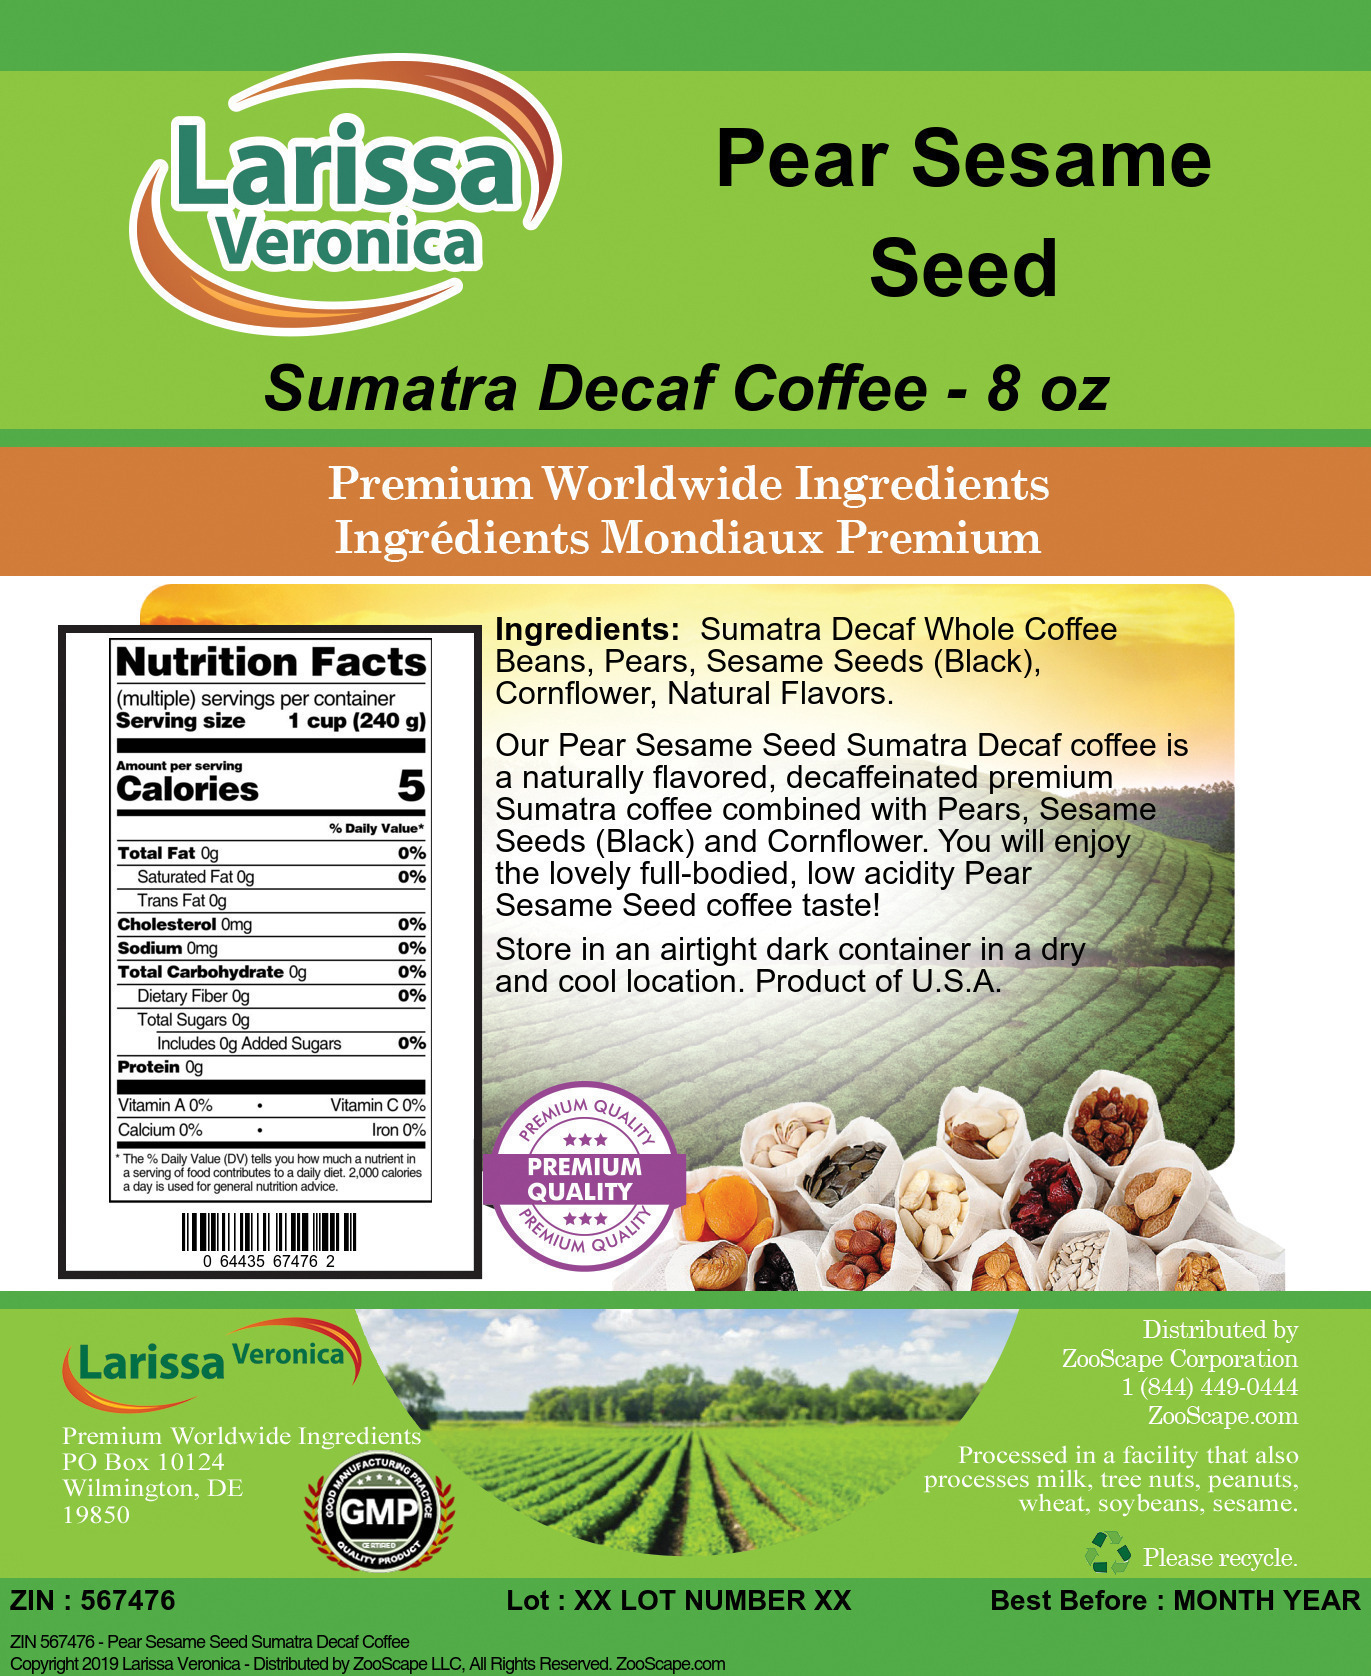 Pear Sesame Seed Sumatra Decaf Coffee - Label